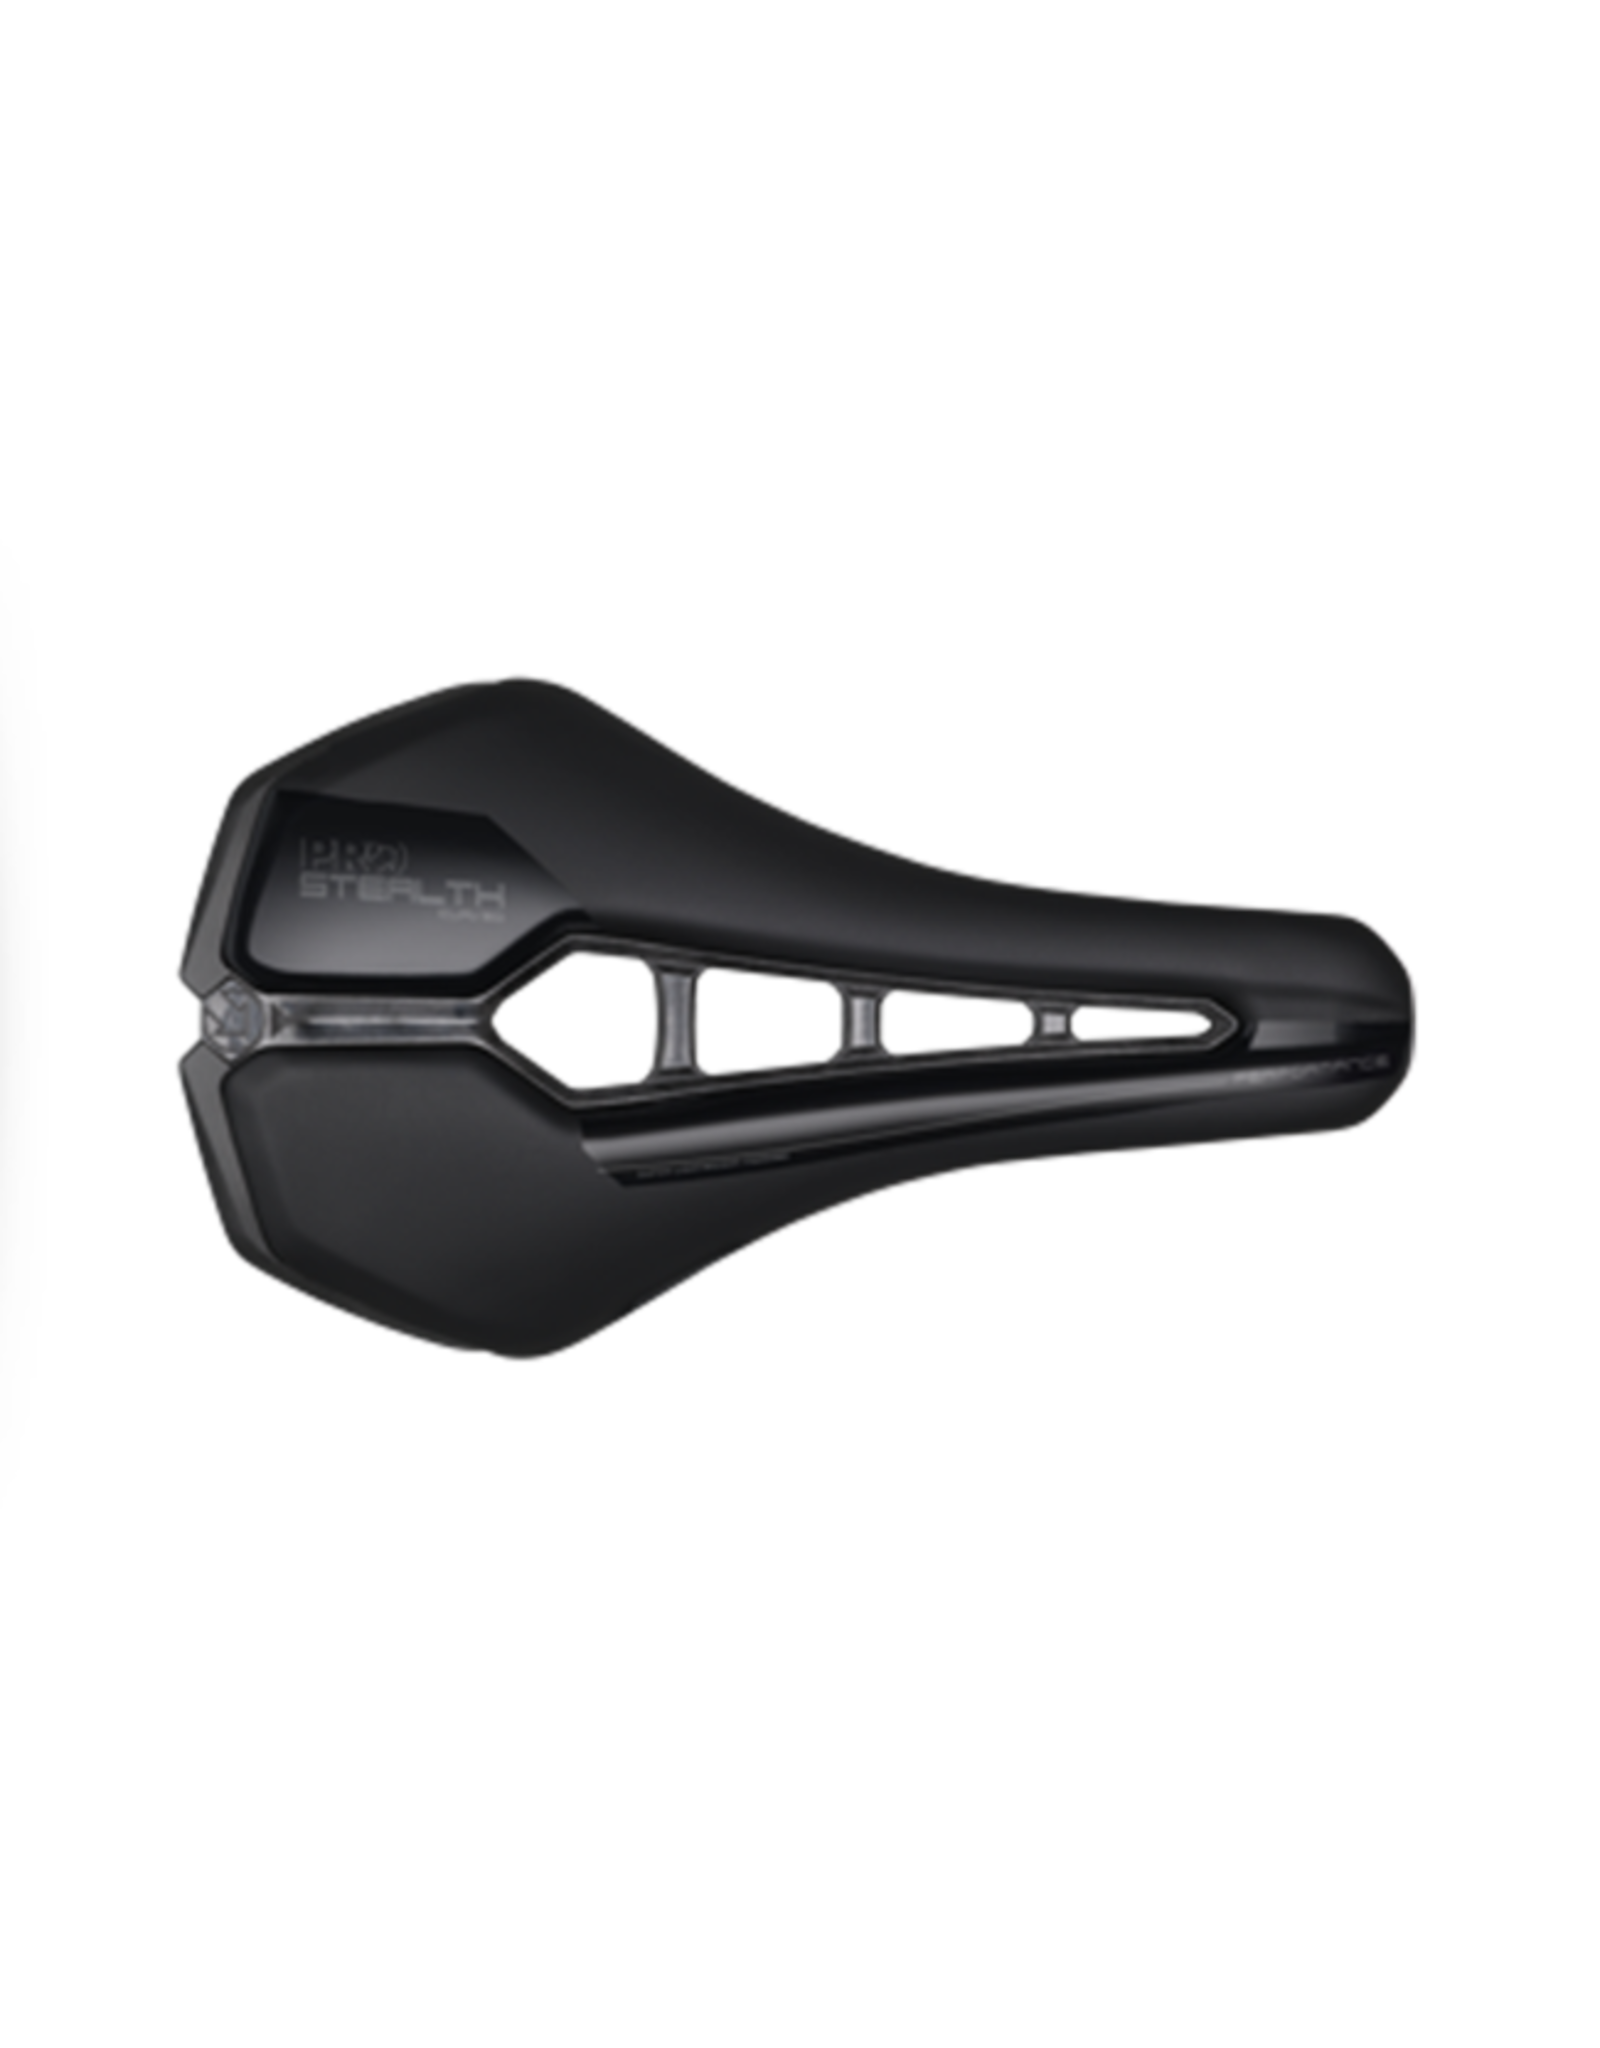 Pro Saddle PRO Stealth Curved Performance black